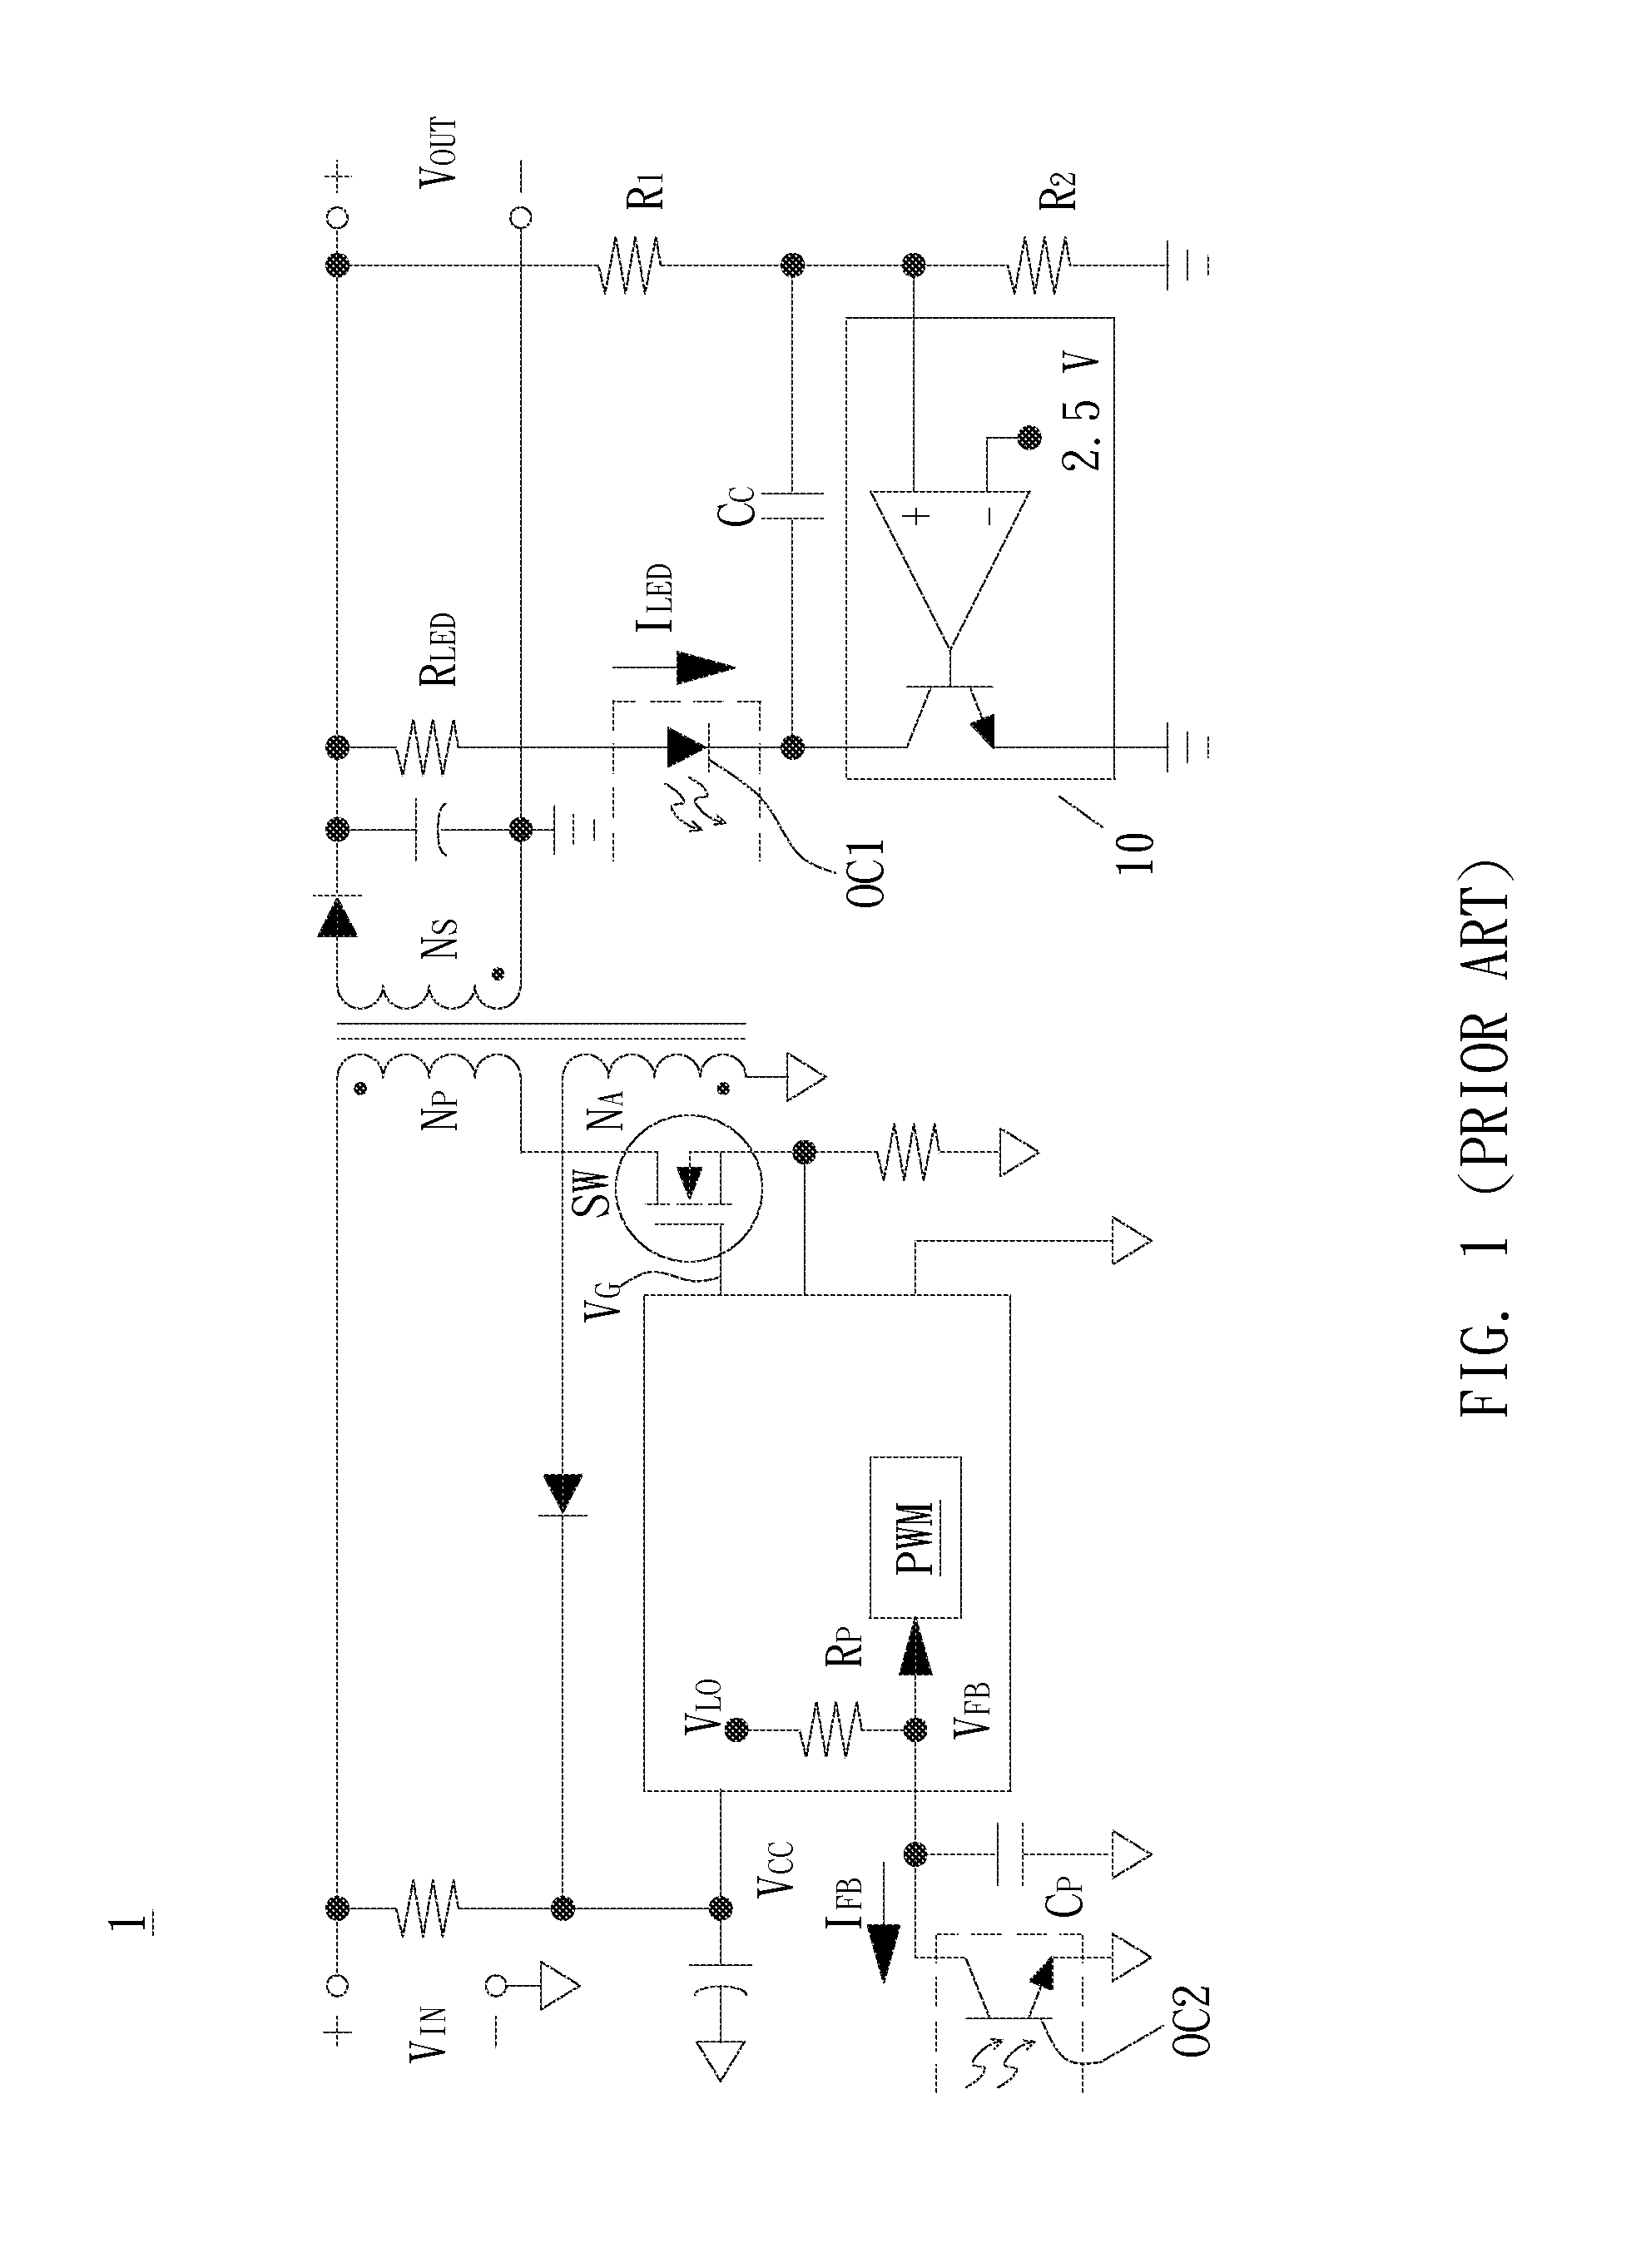 Isolated power converter, inverting type shunt regulator, and operating method thereof